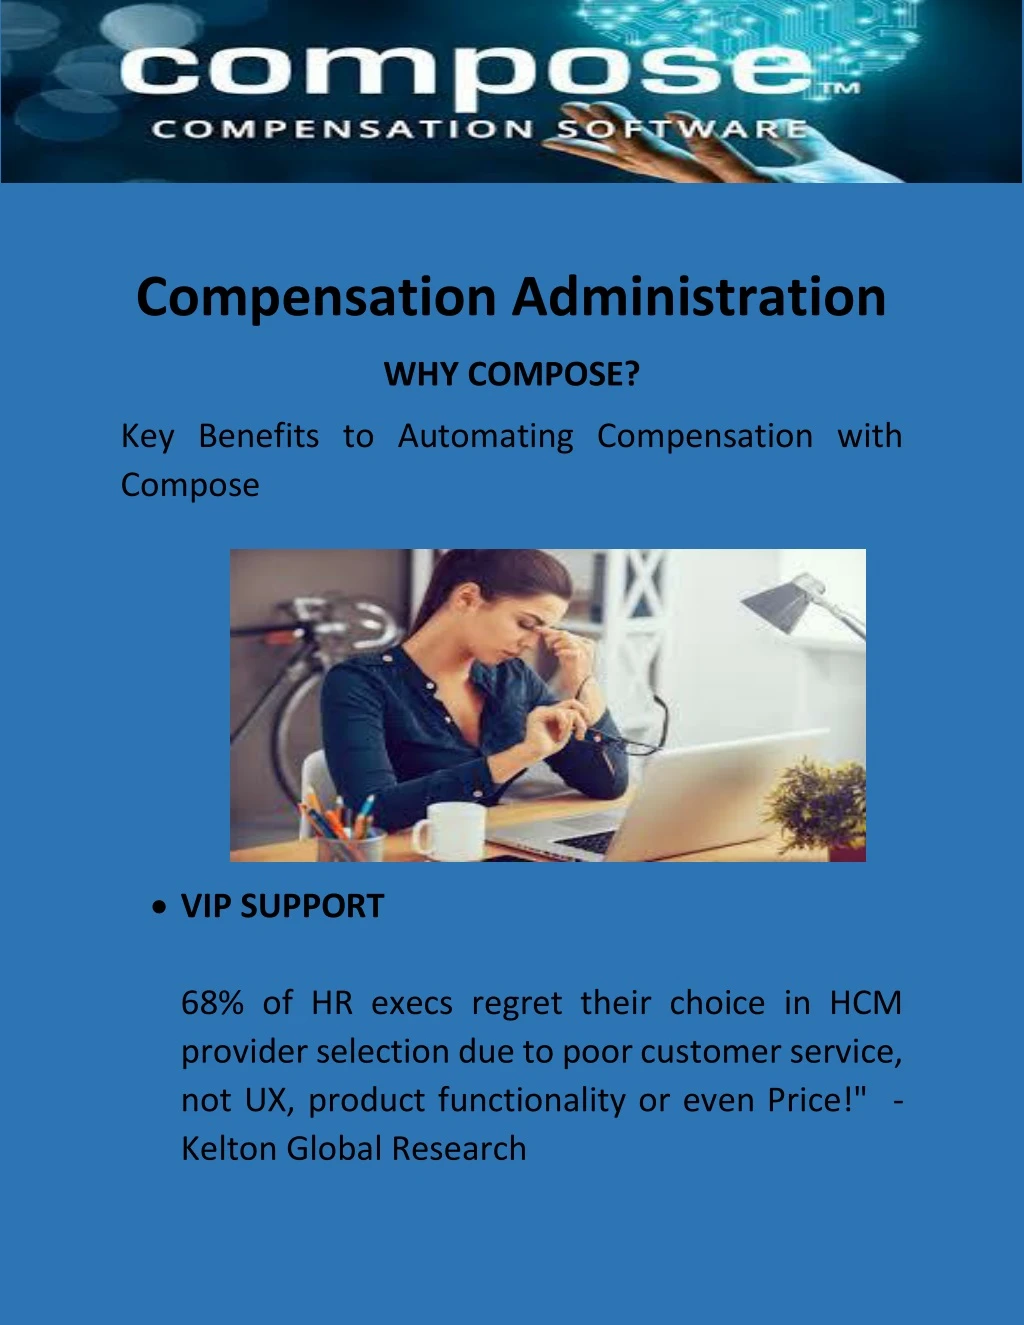 compensation administration